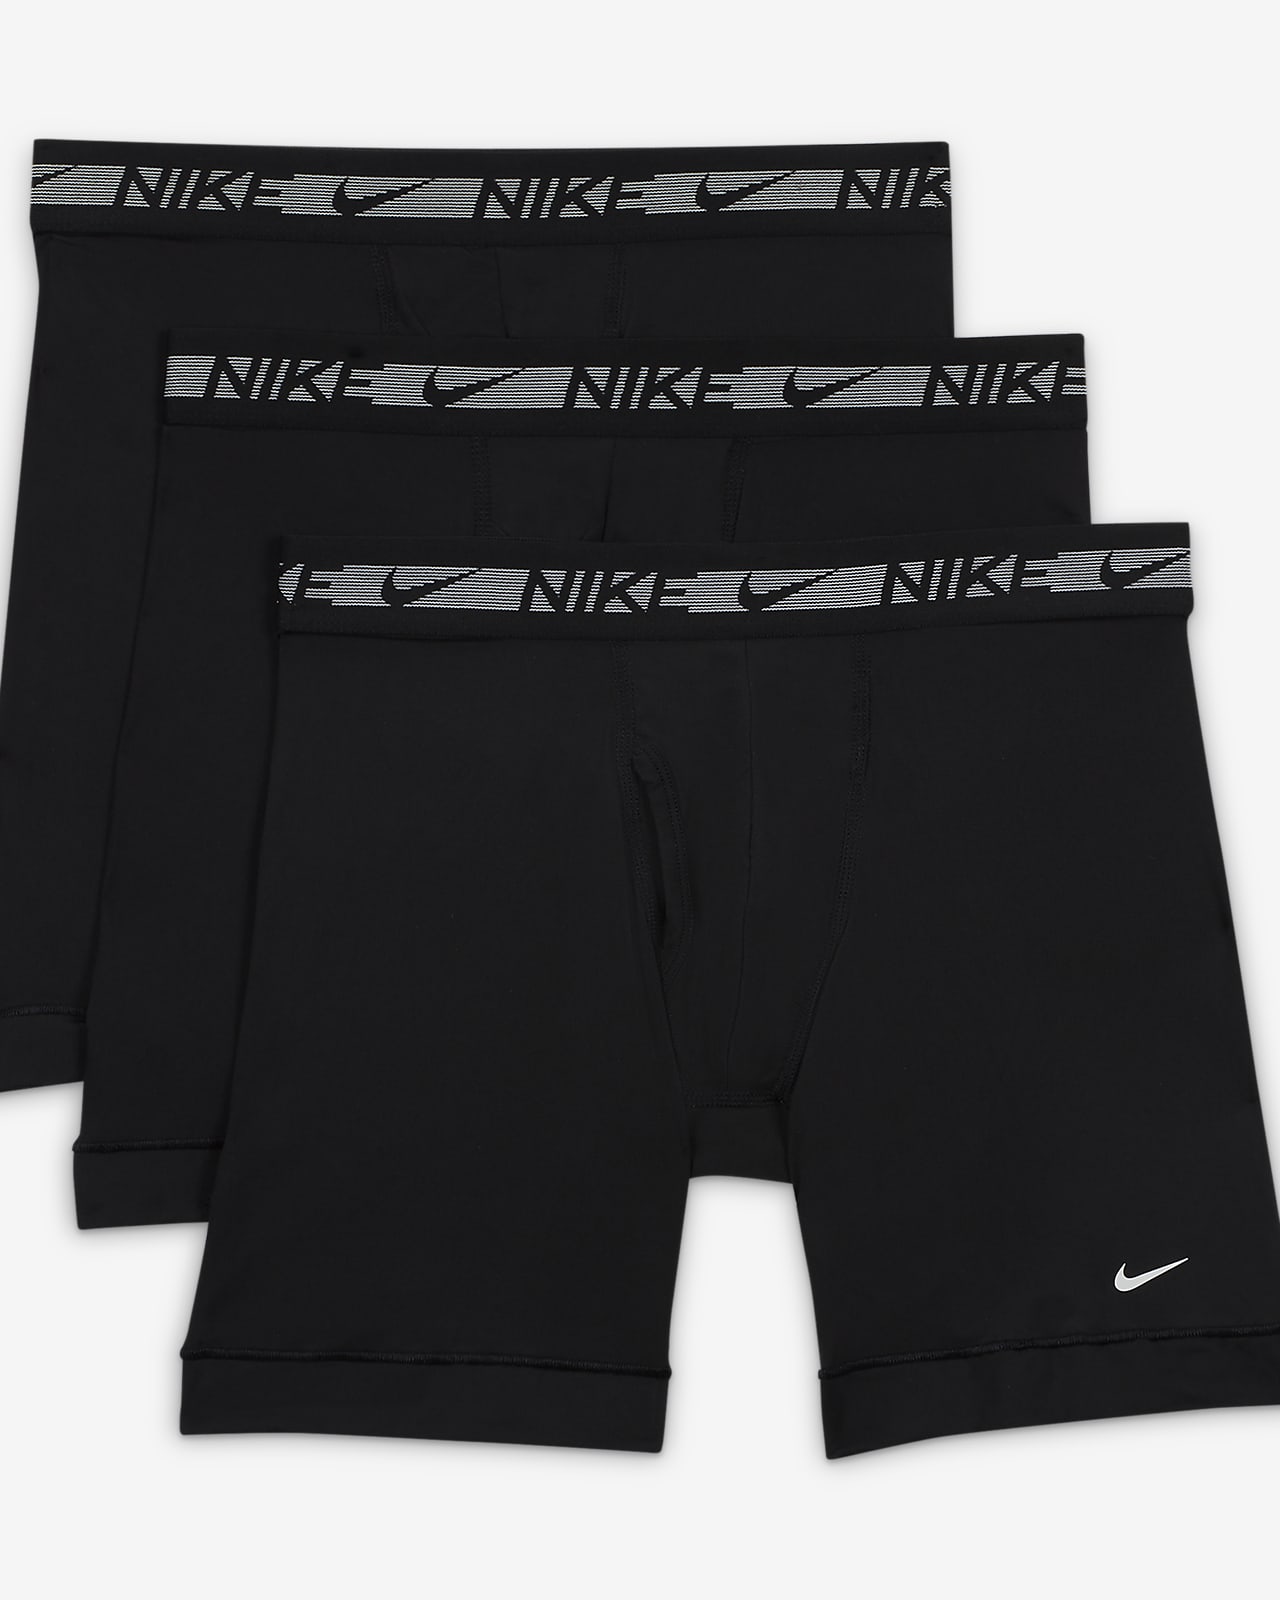 Nike, 3 Pack Stretch Long Boxer Shorts Mens, Trunks